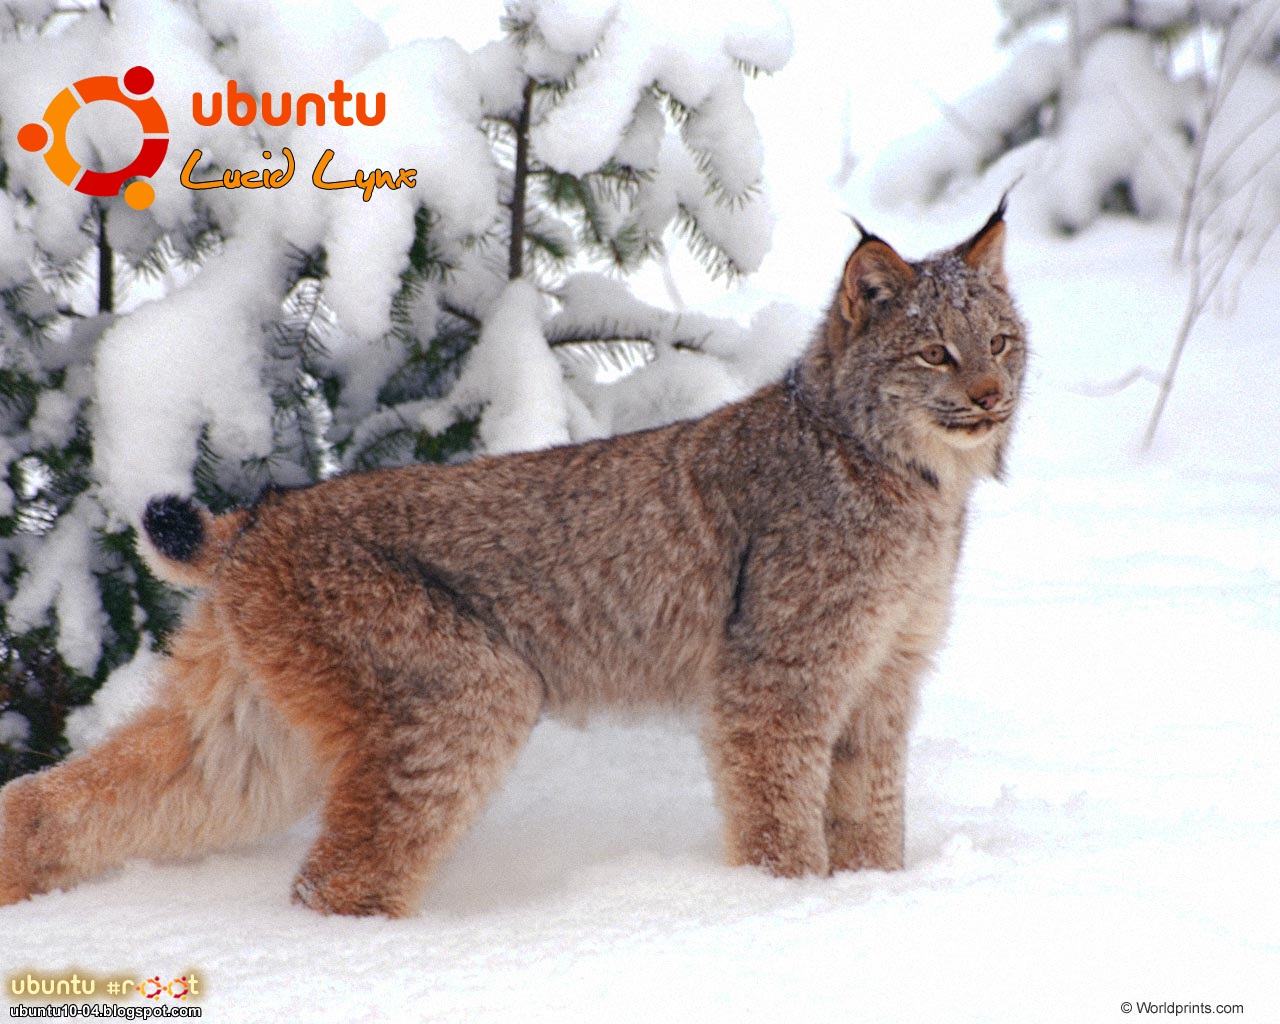 Ubuntu 10.04 LTS: The Lucid Lynx Wallpapers | Ubuntu Root